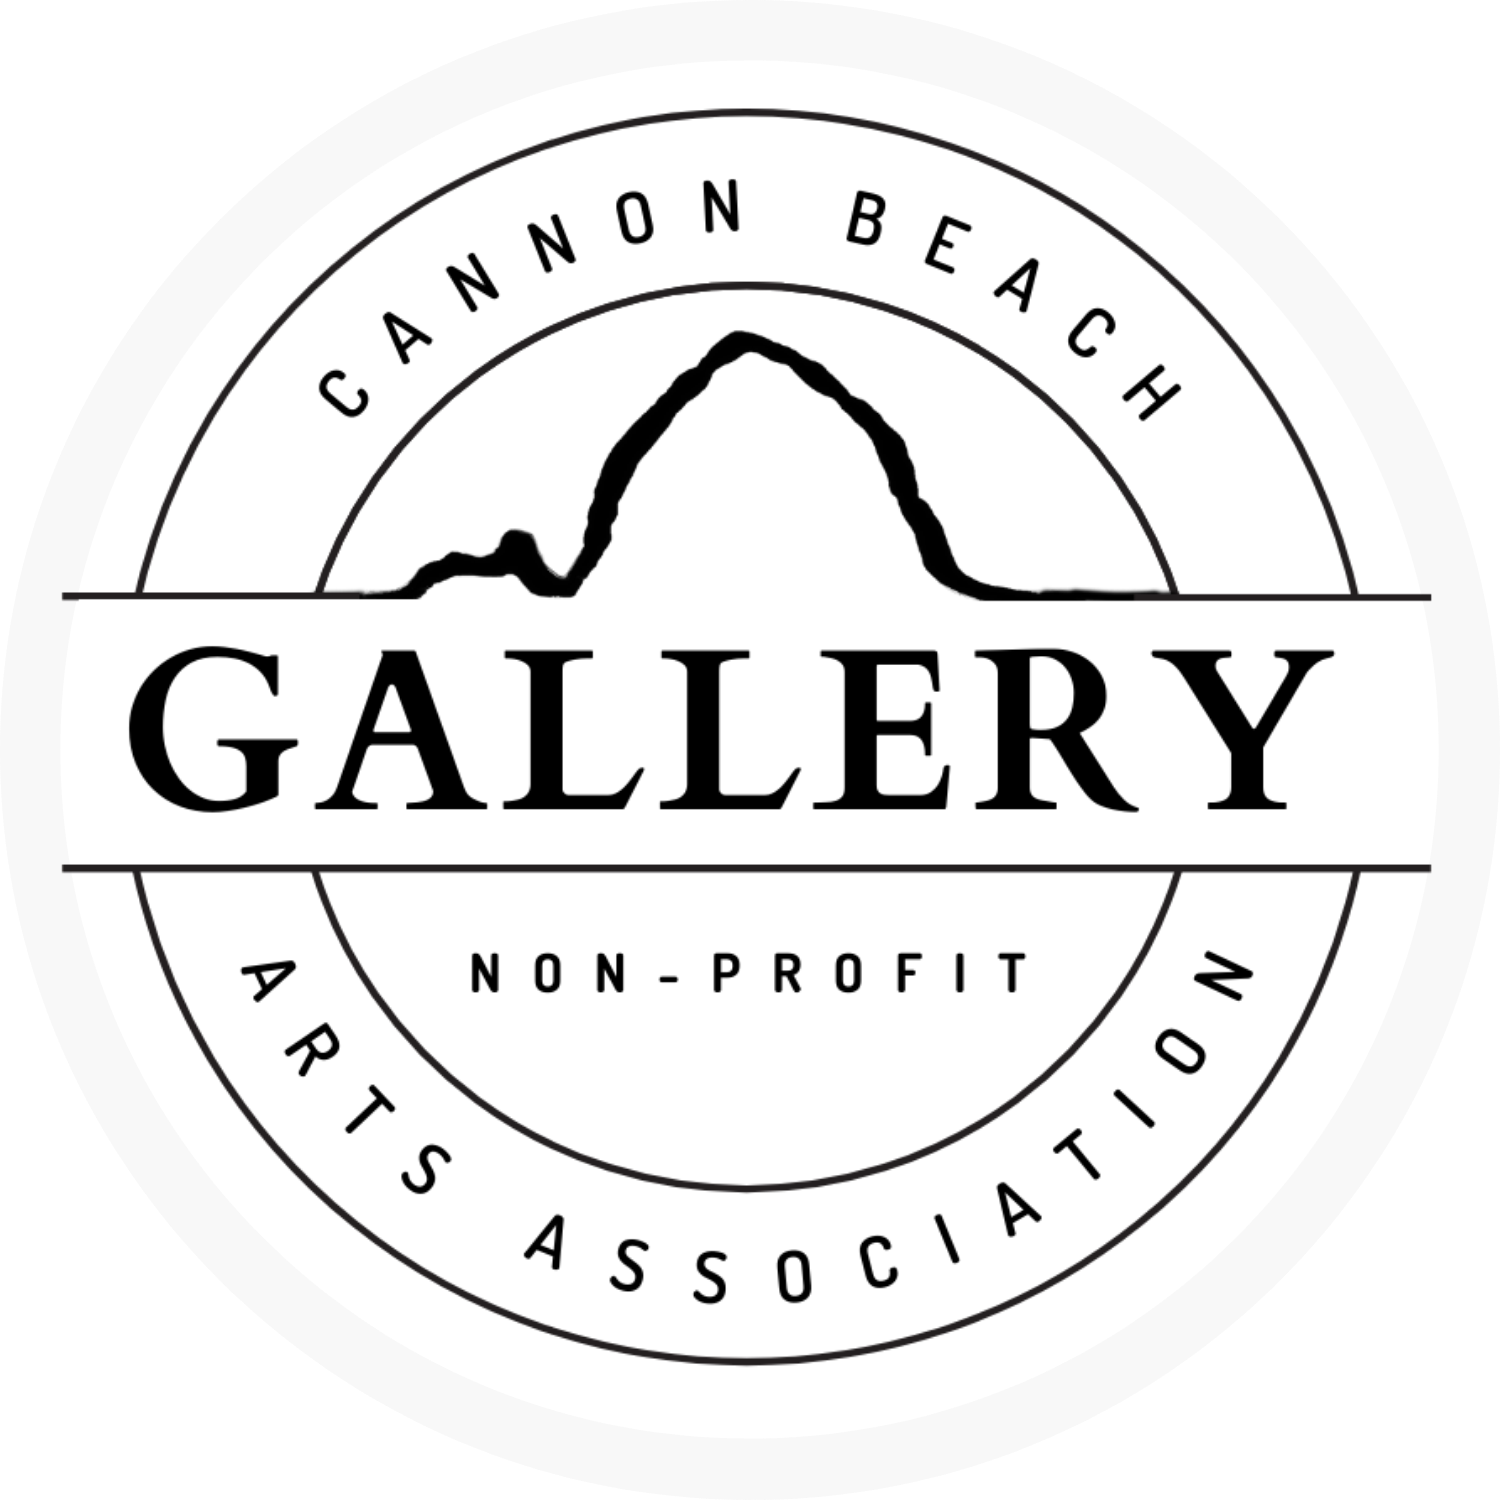 Cannon Beach Arts Association